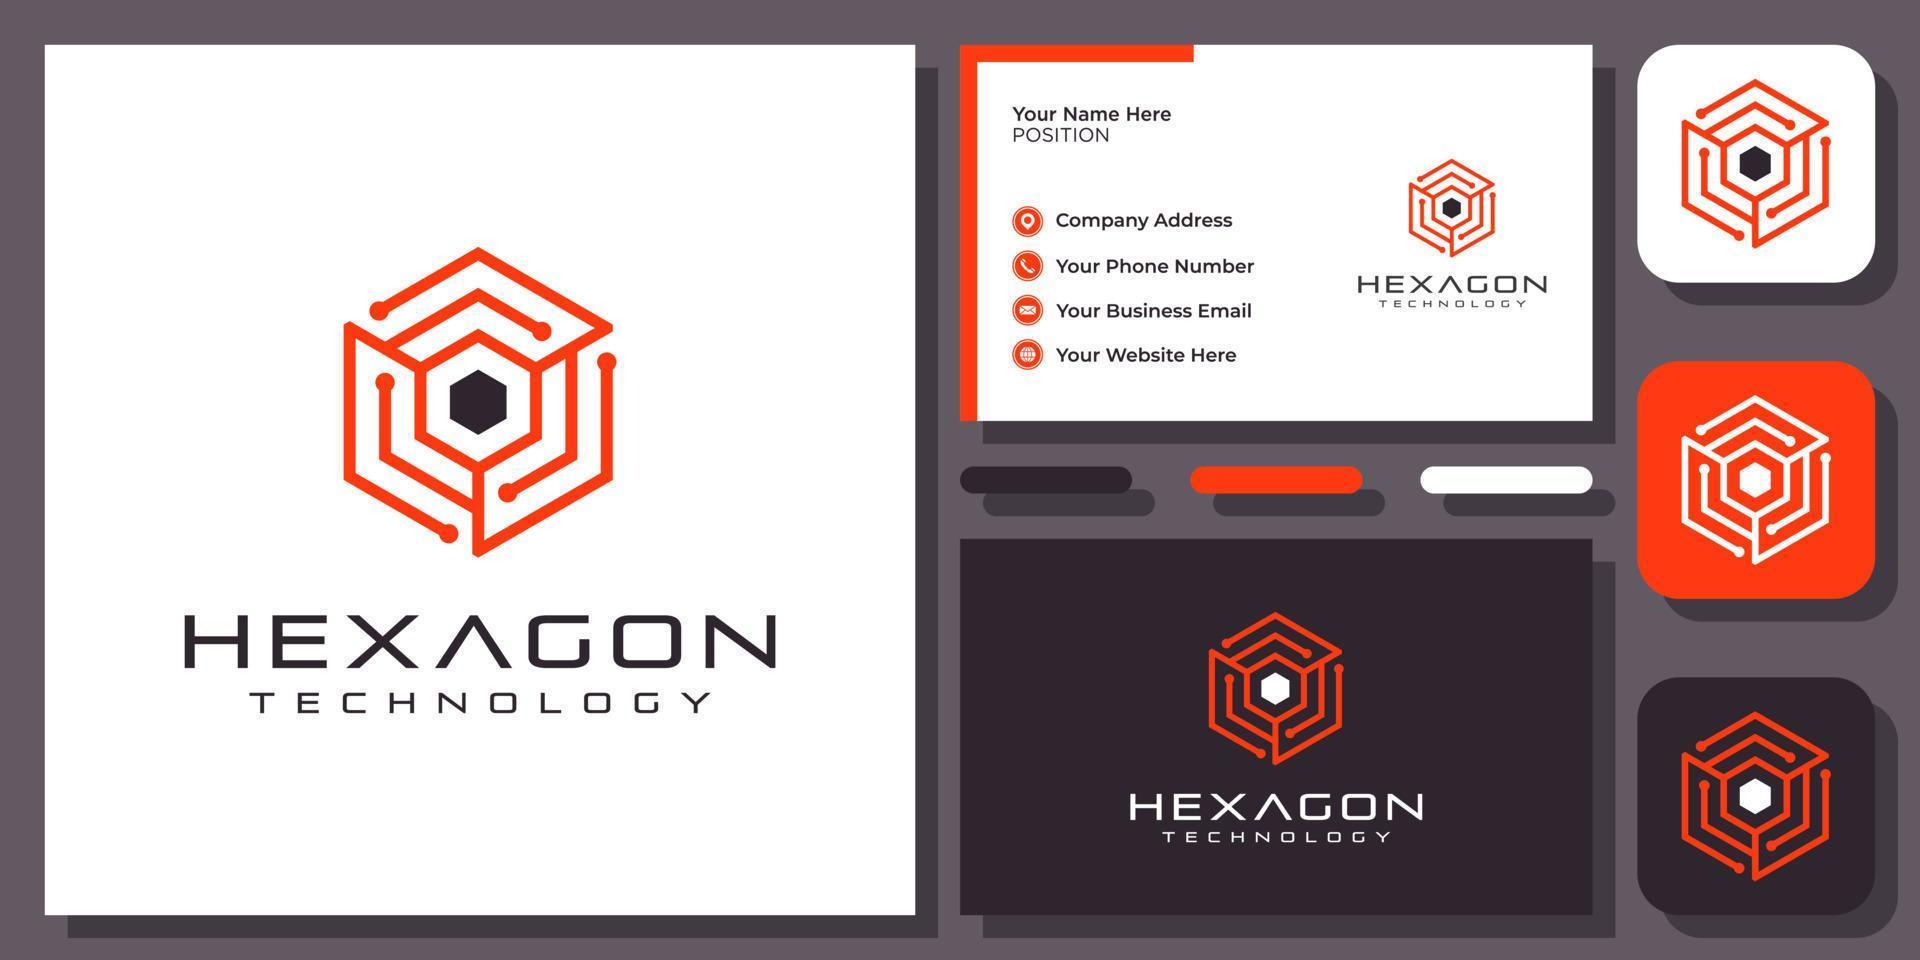 Hexagon-Technologie-Leiterplatte verbindet System Digital-Tech-Vektor-Logo-Design mit Visitenkarte vektor